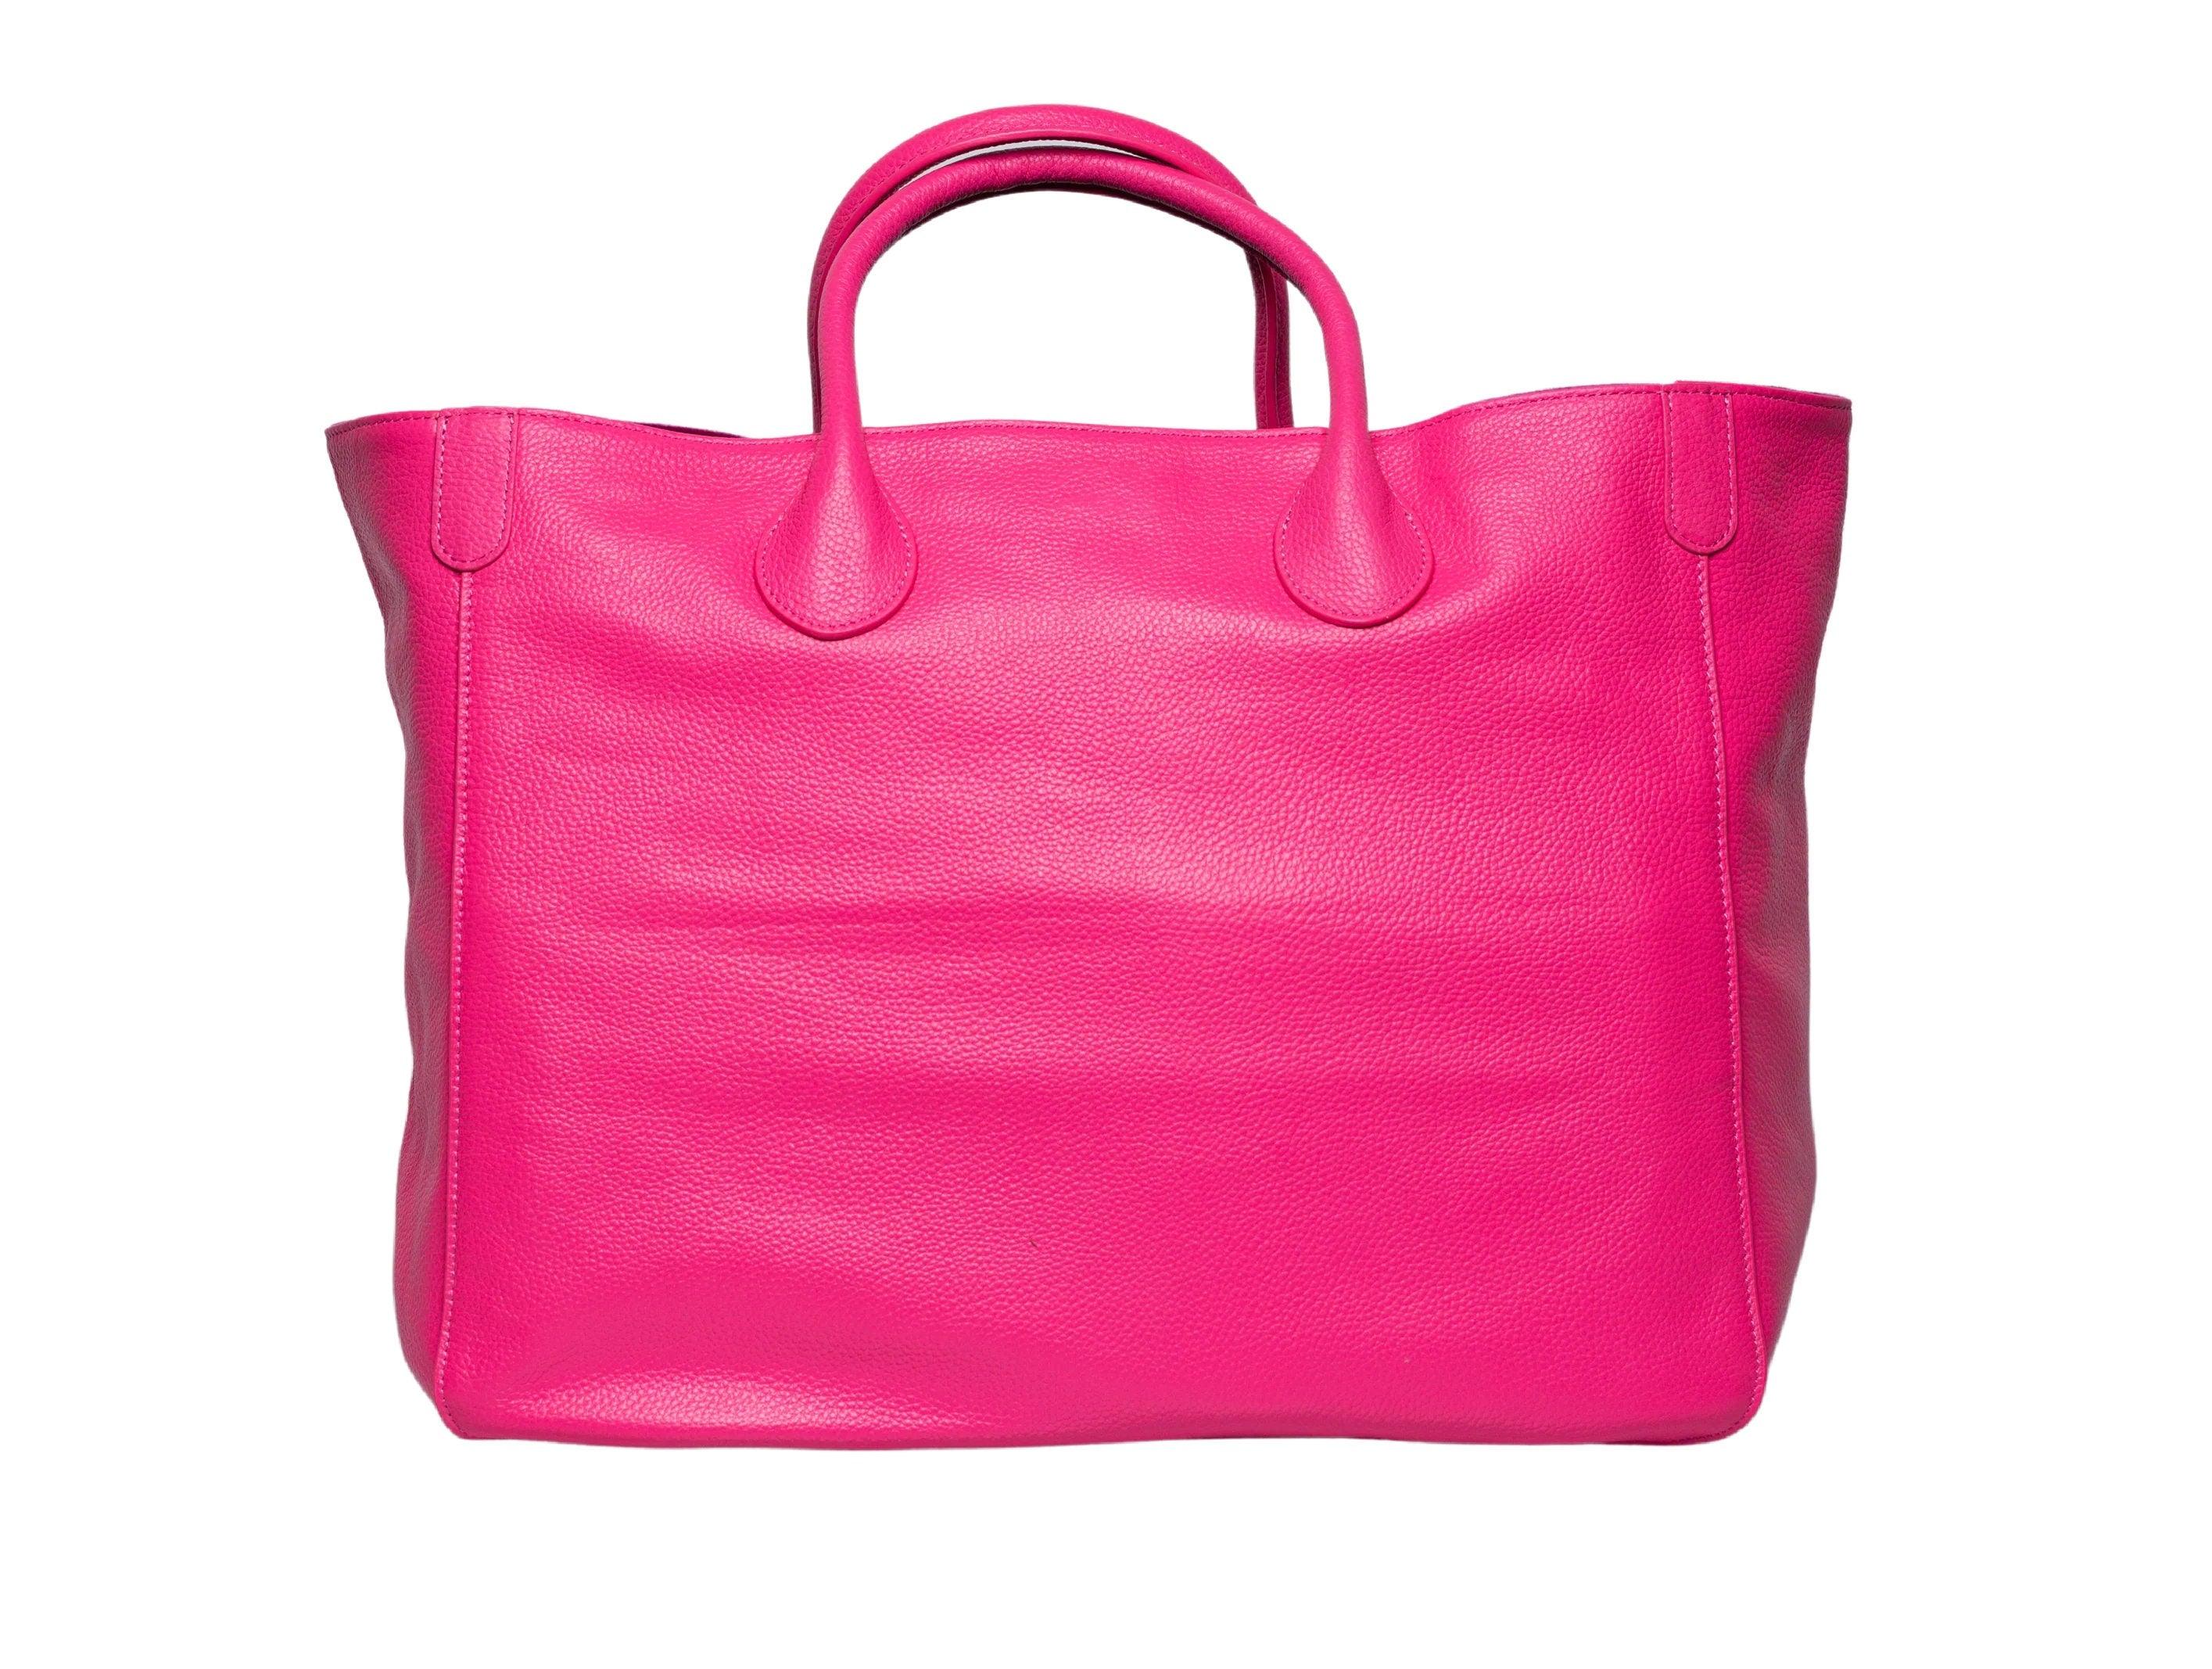 Neon Pink Large Leather Tote Bag, Cowhide Leather Bag, Lady Fashion Bag, Leather Weekend Bag, Women Must-Have Designer Bag, Traveling Bag